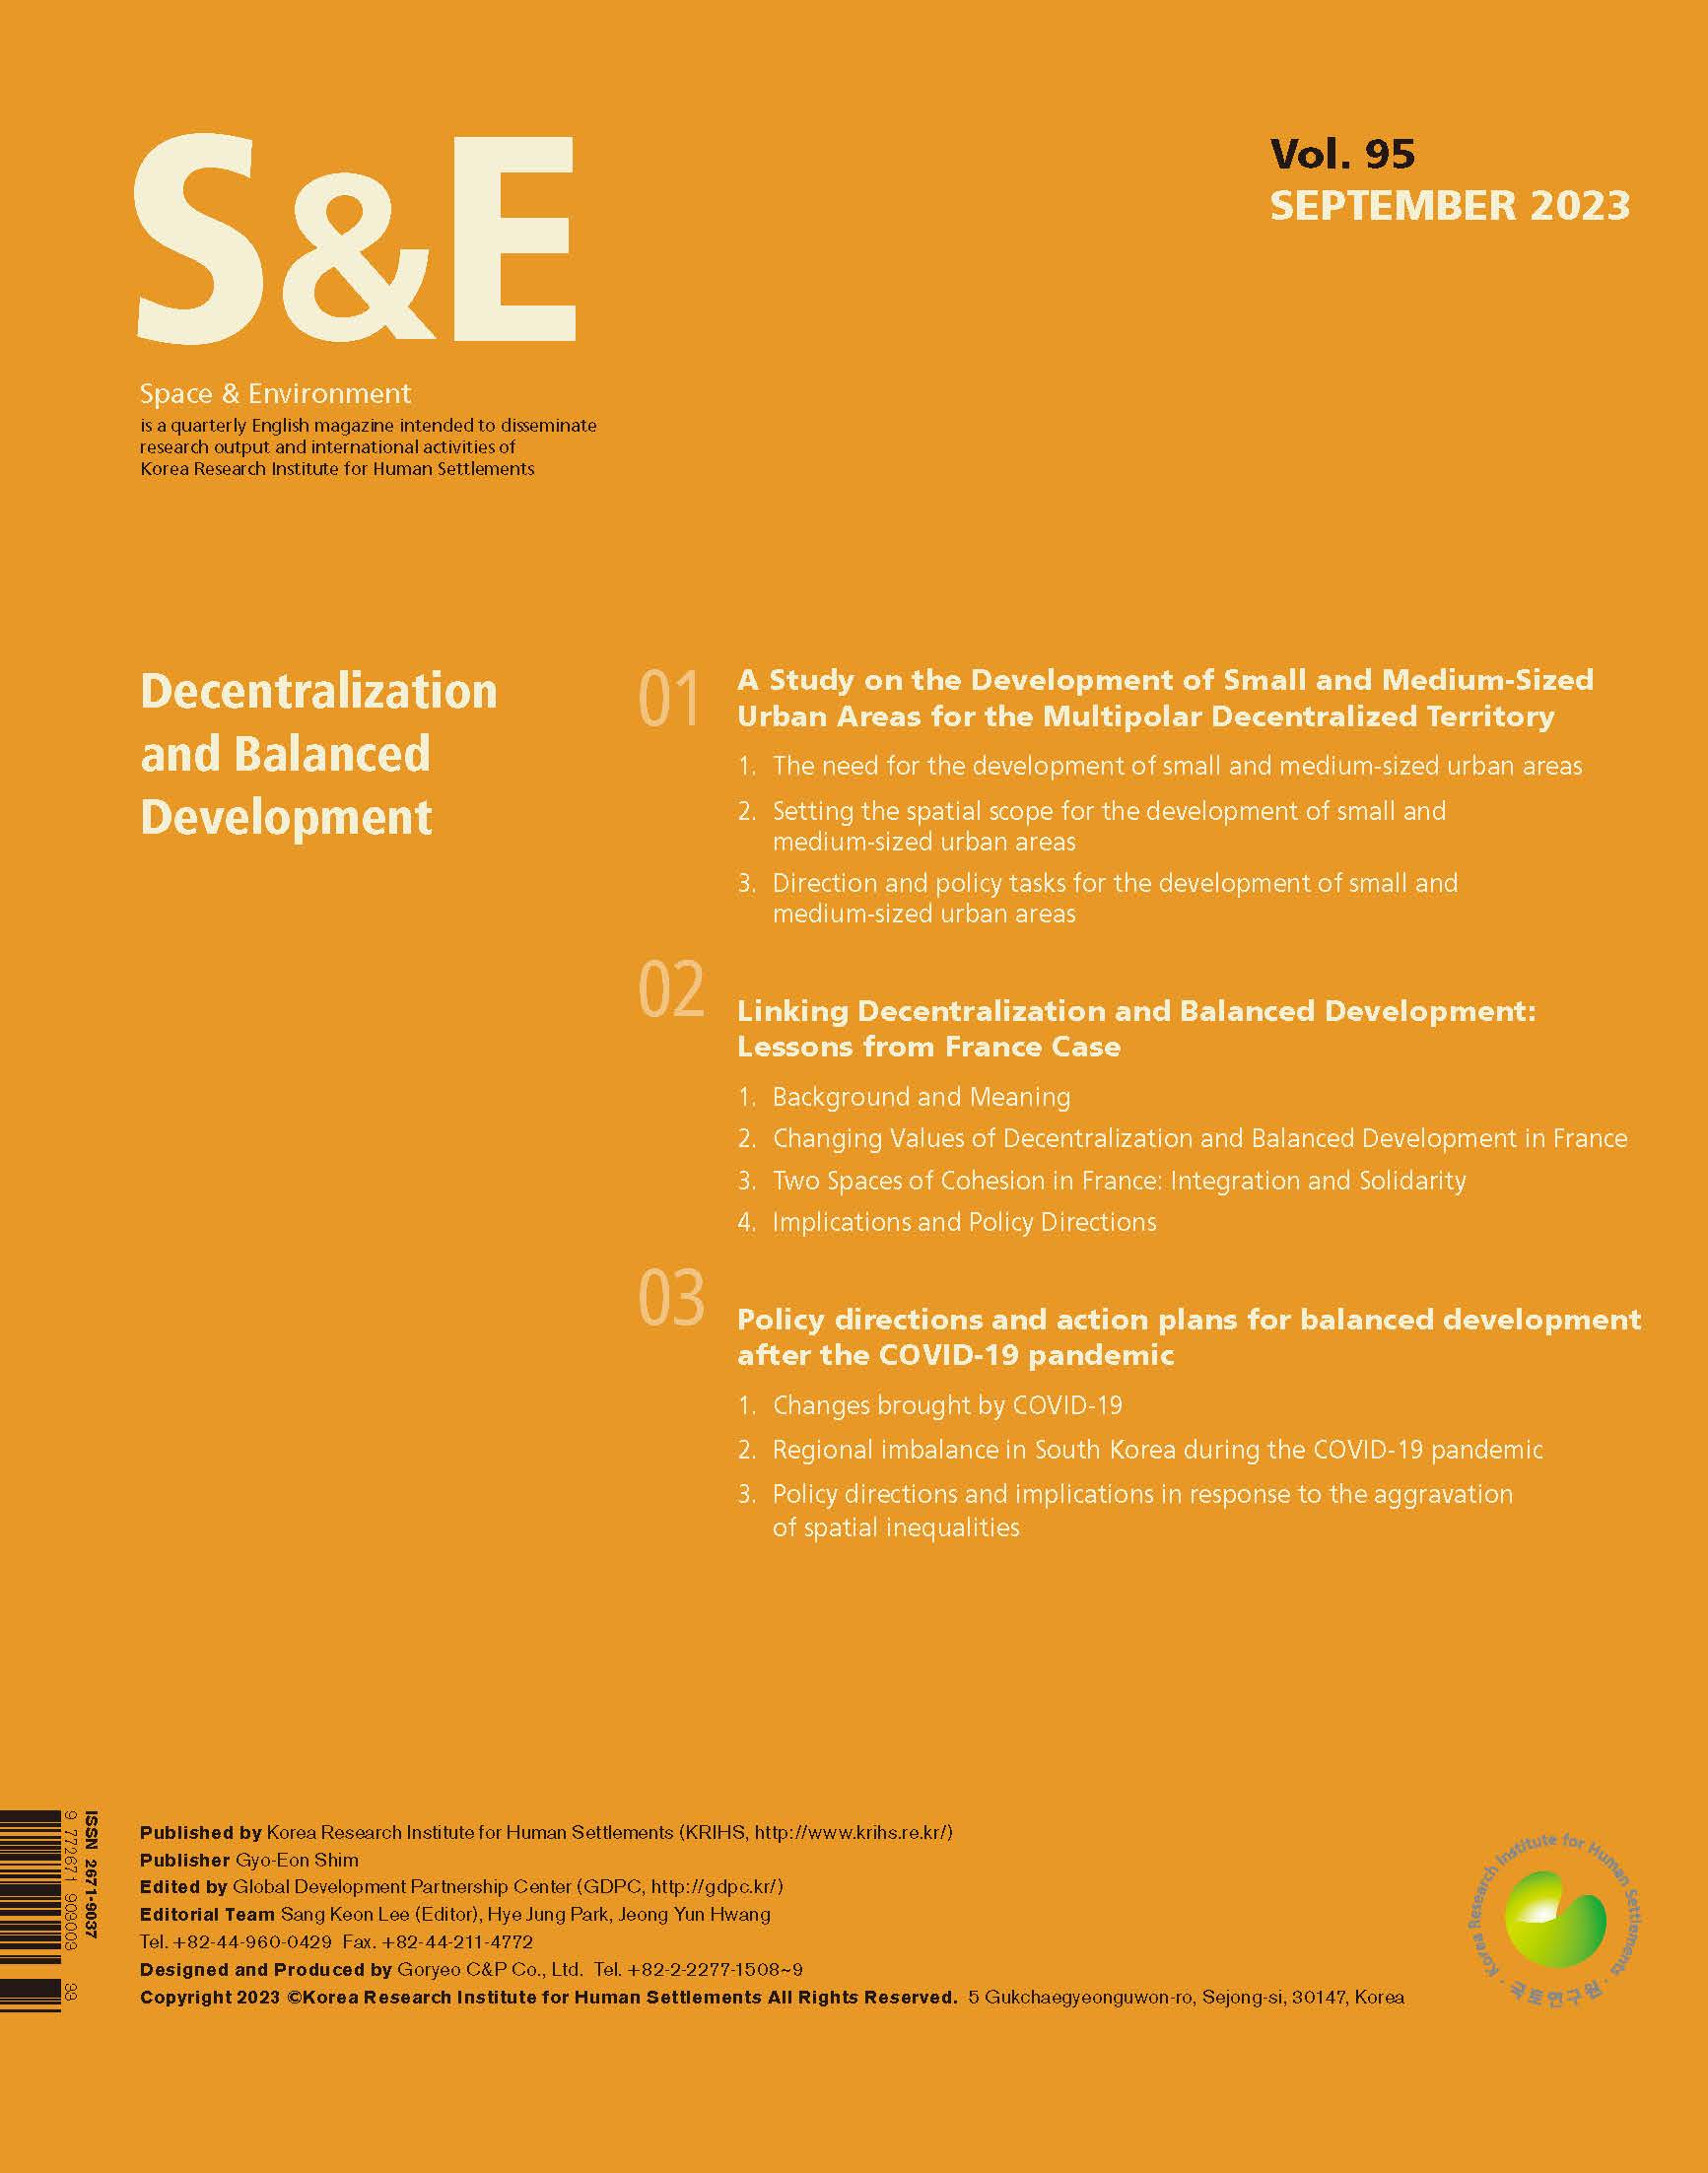 Space & Environment Vol. 95 (September 2023)
Decentralization and Balanced Development